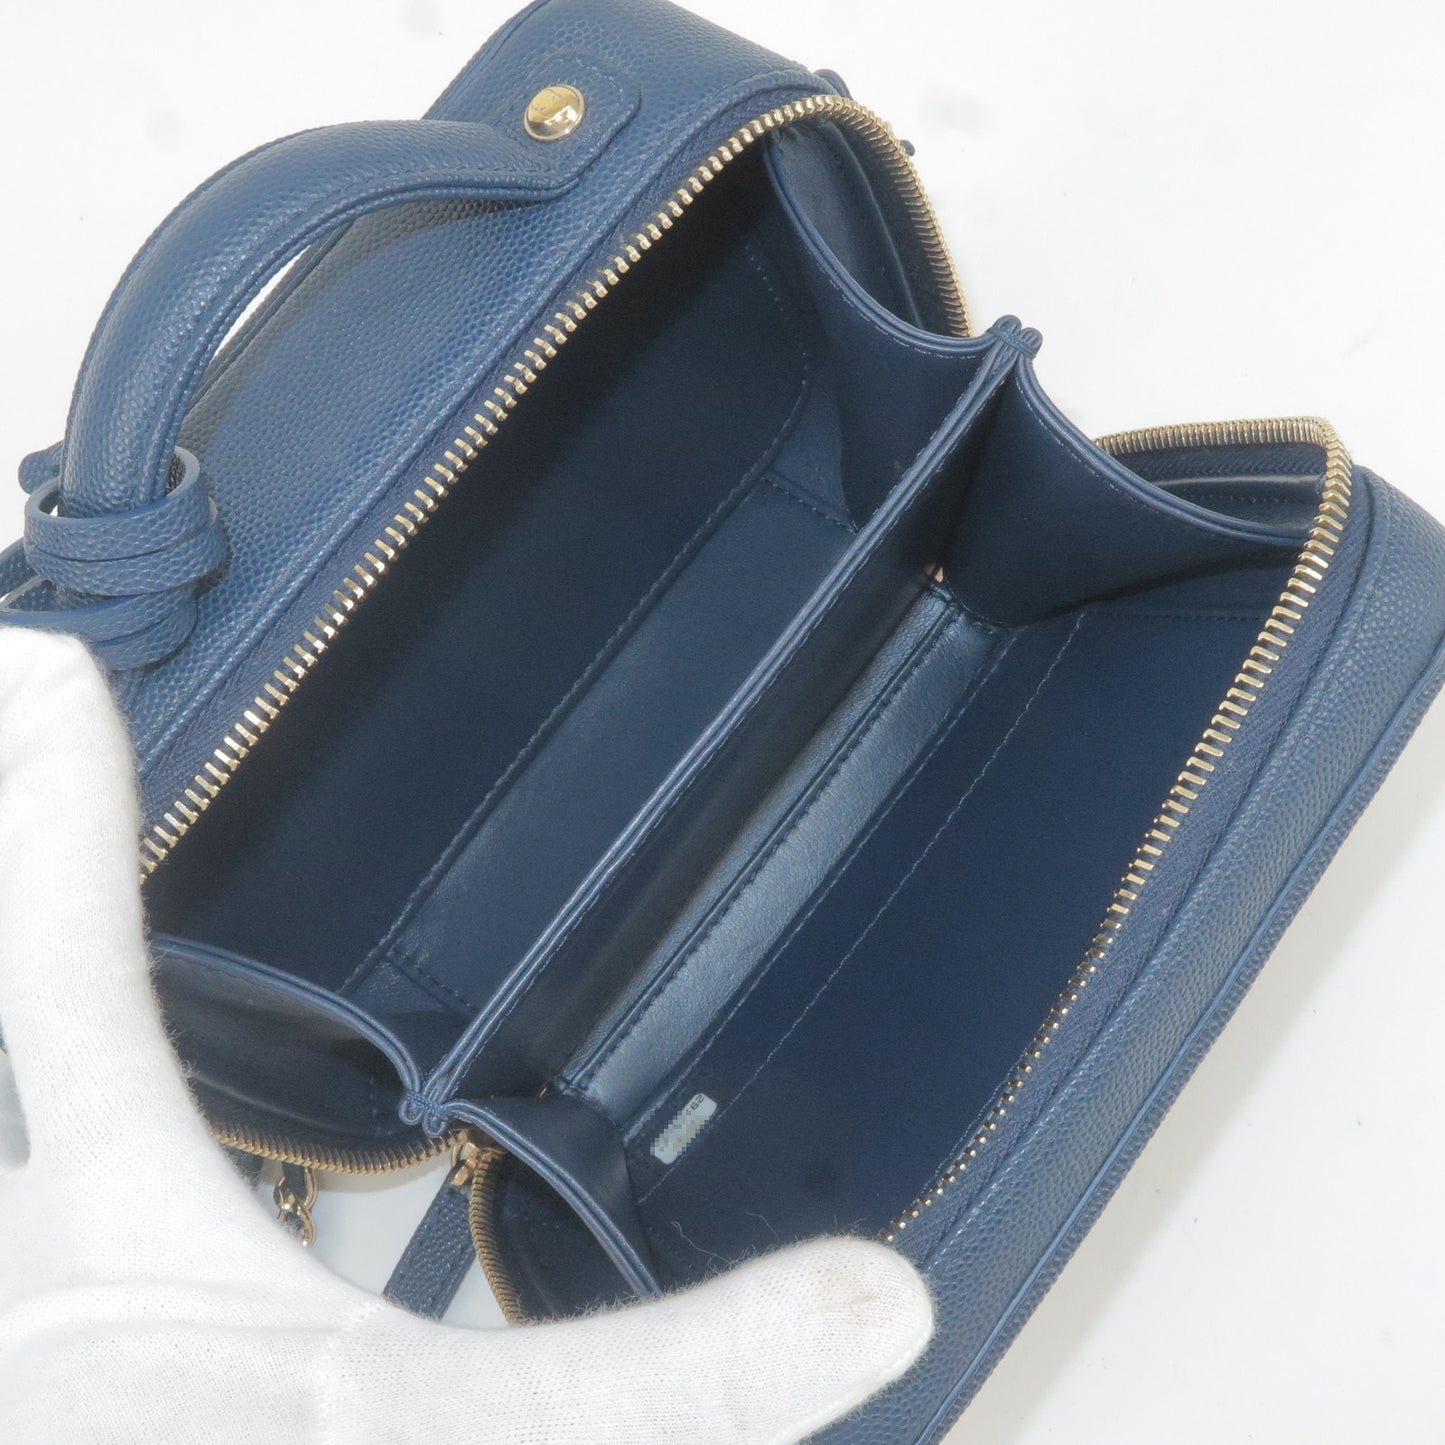 CHANEL CC Filigree Caviar Skin Vanity Case 2Way Bag Navy A93342